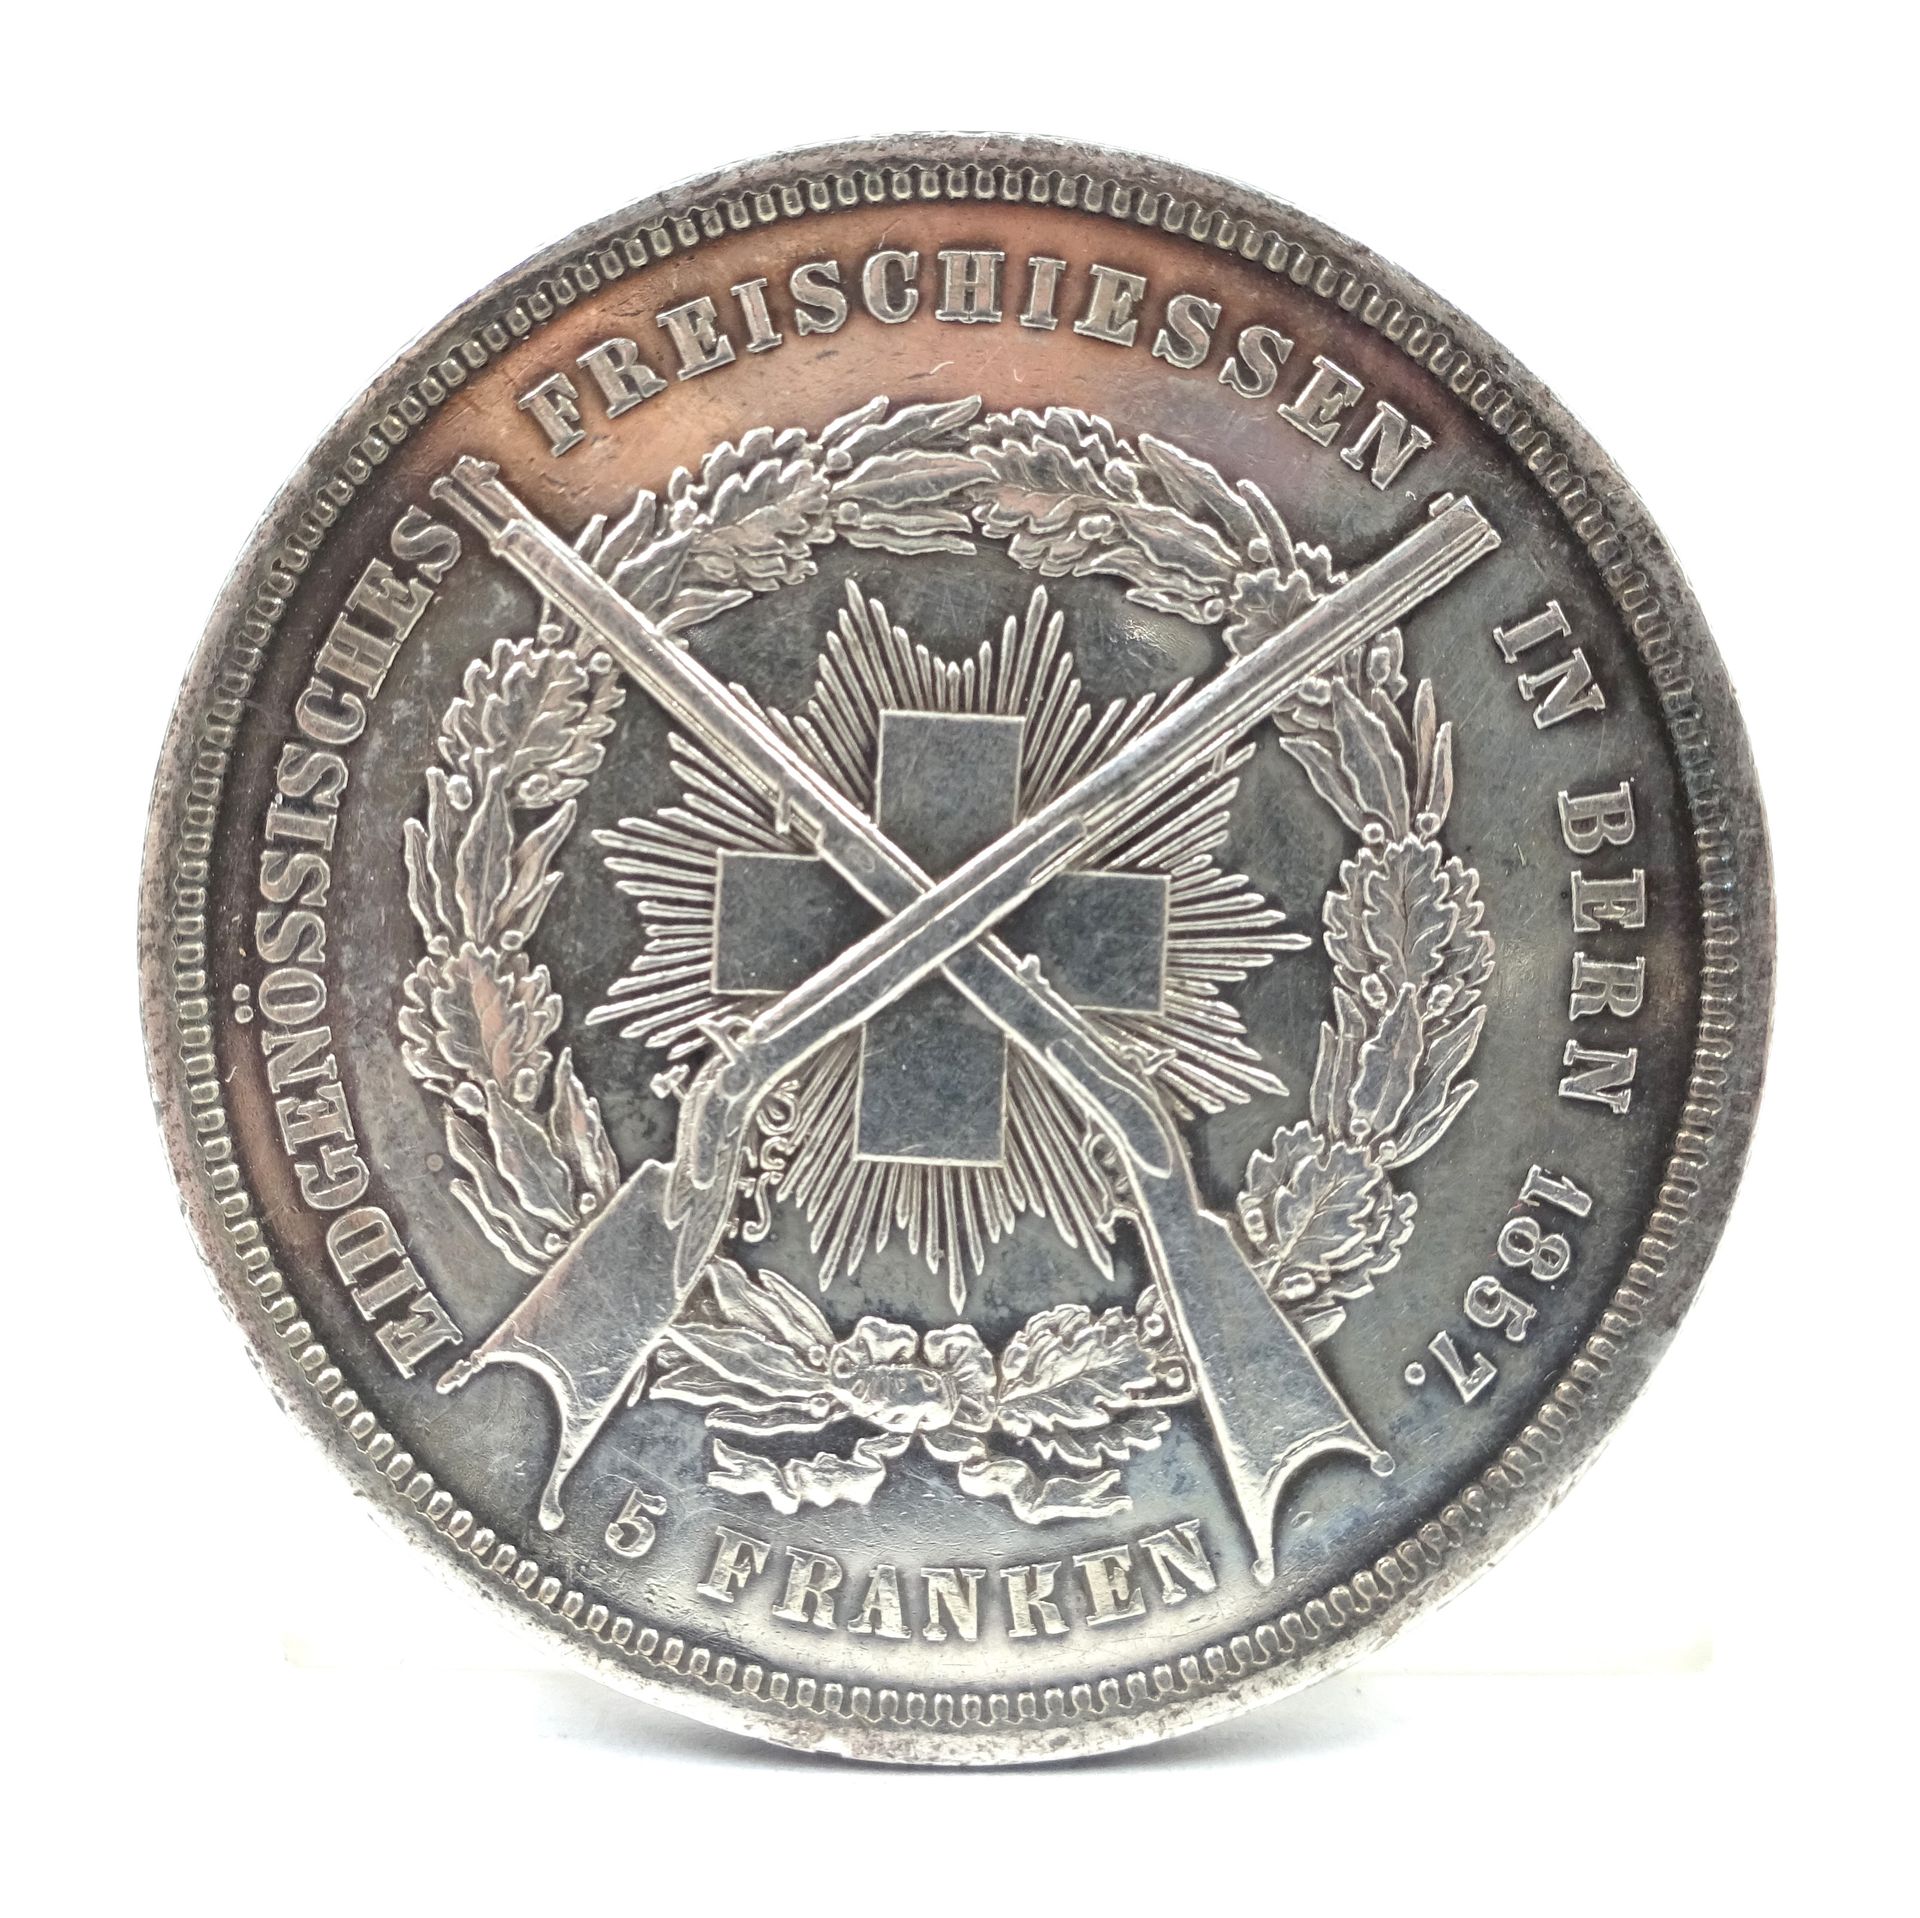 Null Moneda de plata de 5 francos suizos, Berna, 1857. 25,00 g netos.